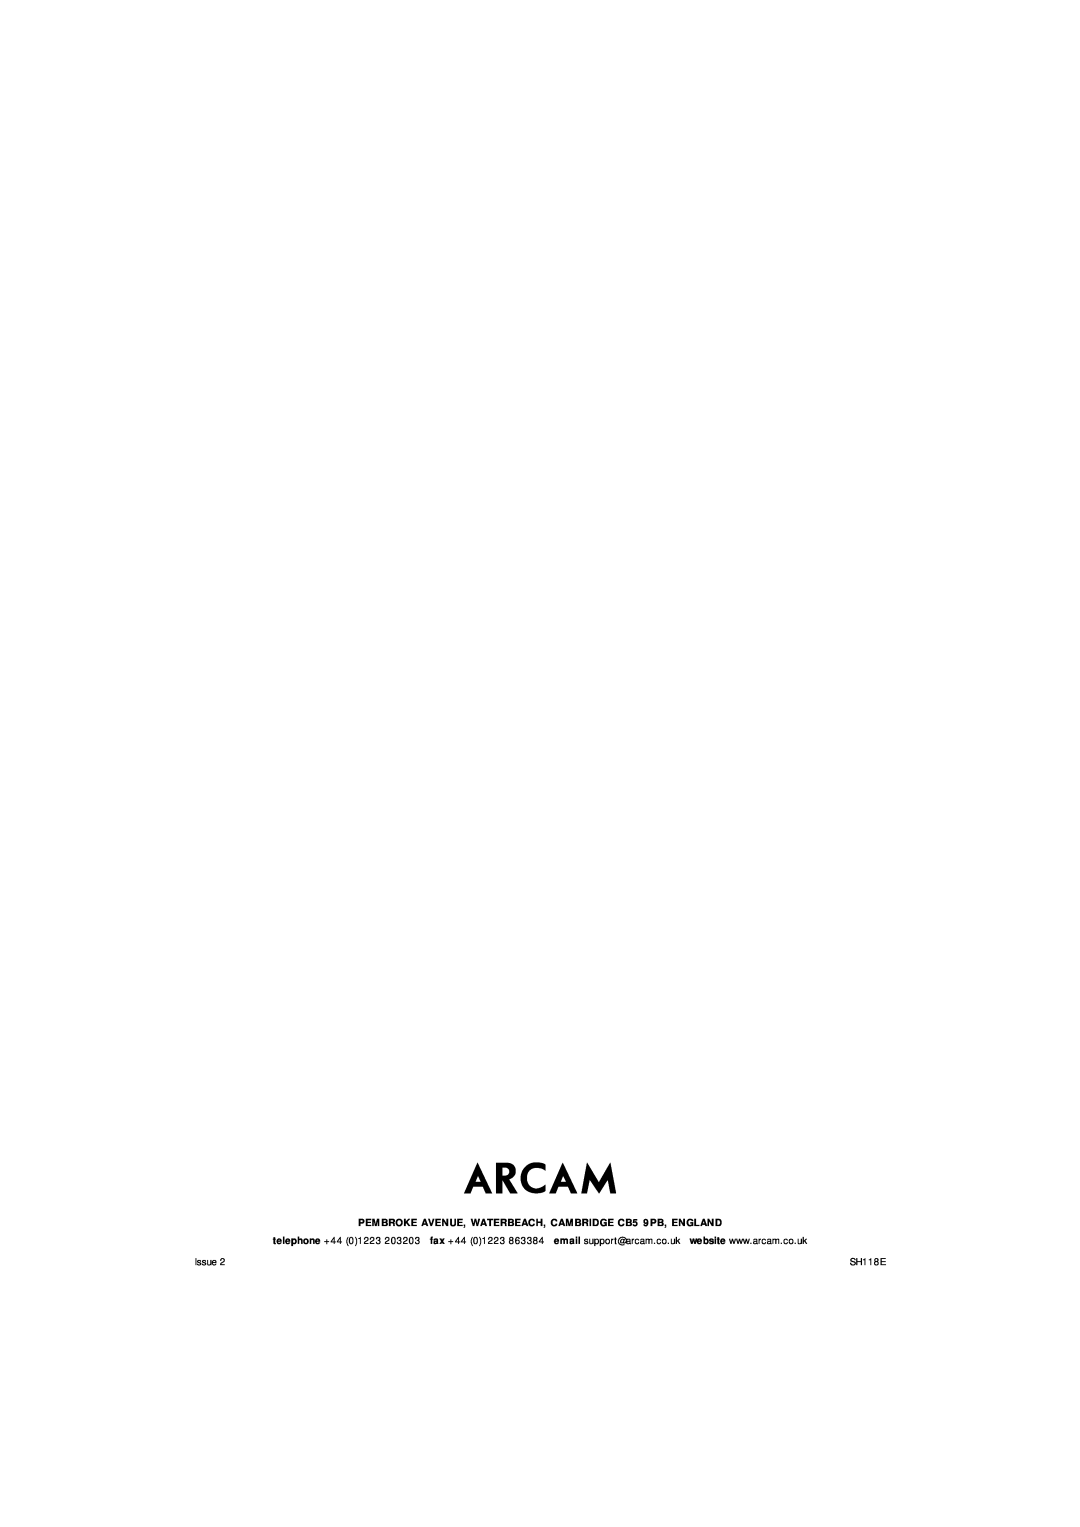 Arcam T61 manual telephone +44, Issue, SH118E 